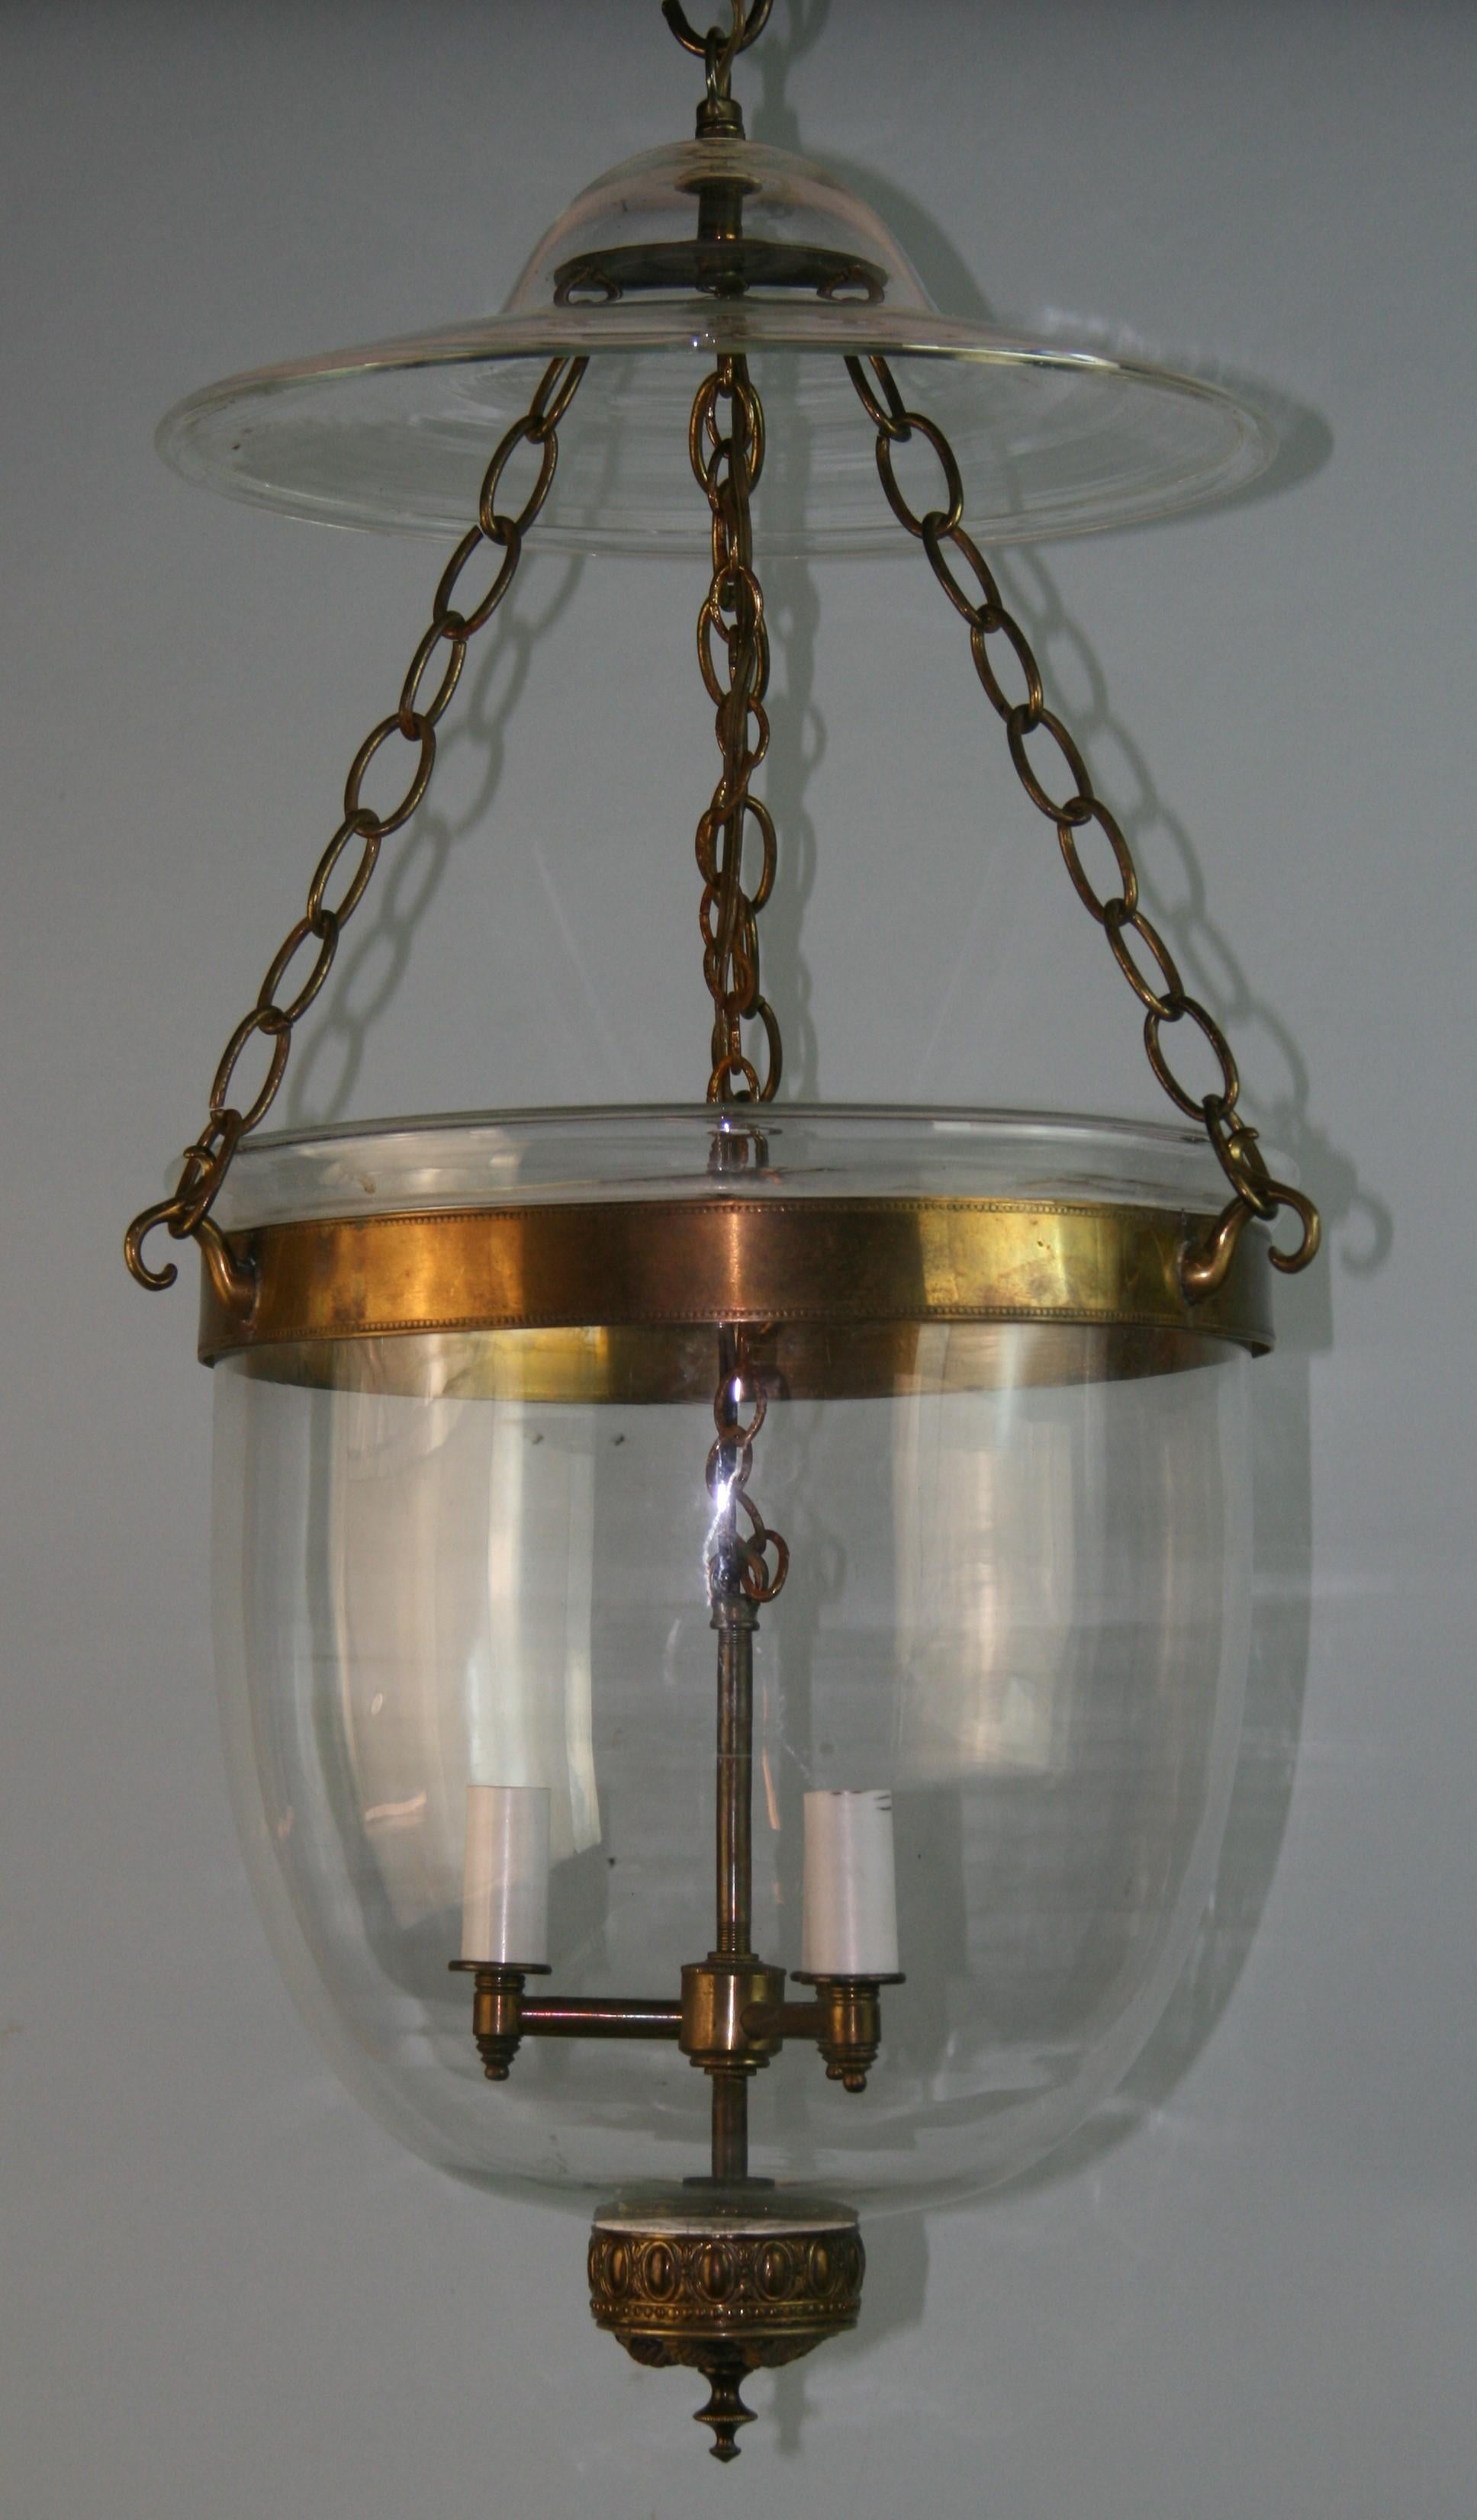 1263 English three light antique bell jar lantern with bronze detailing at base.